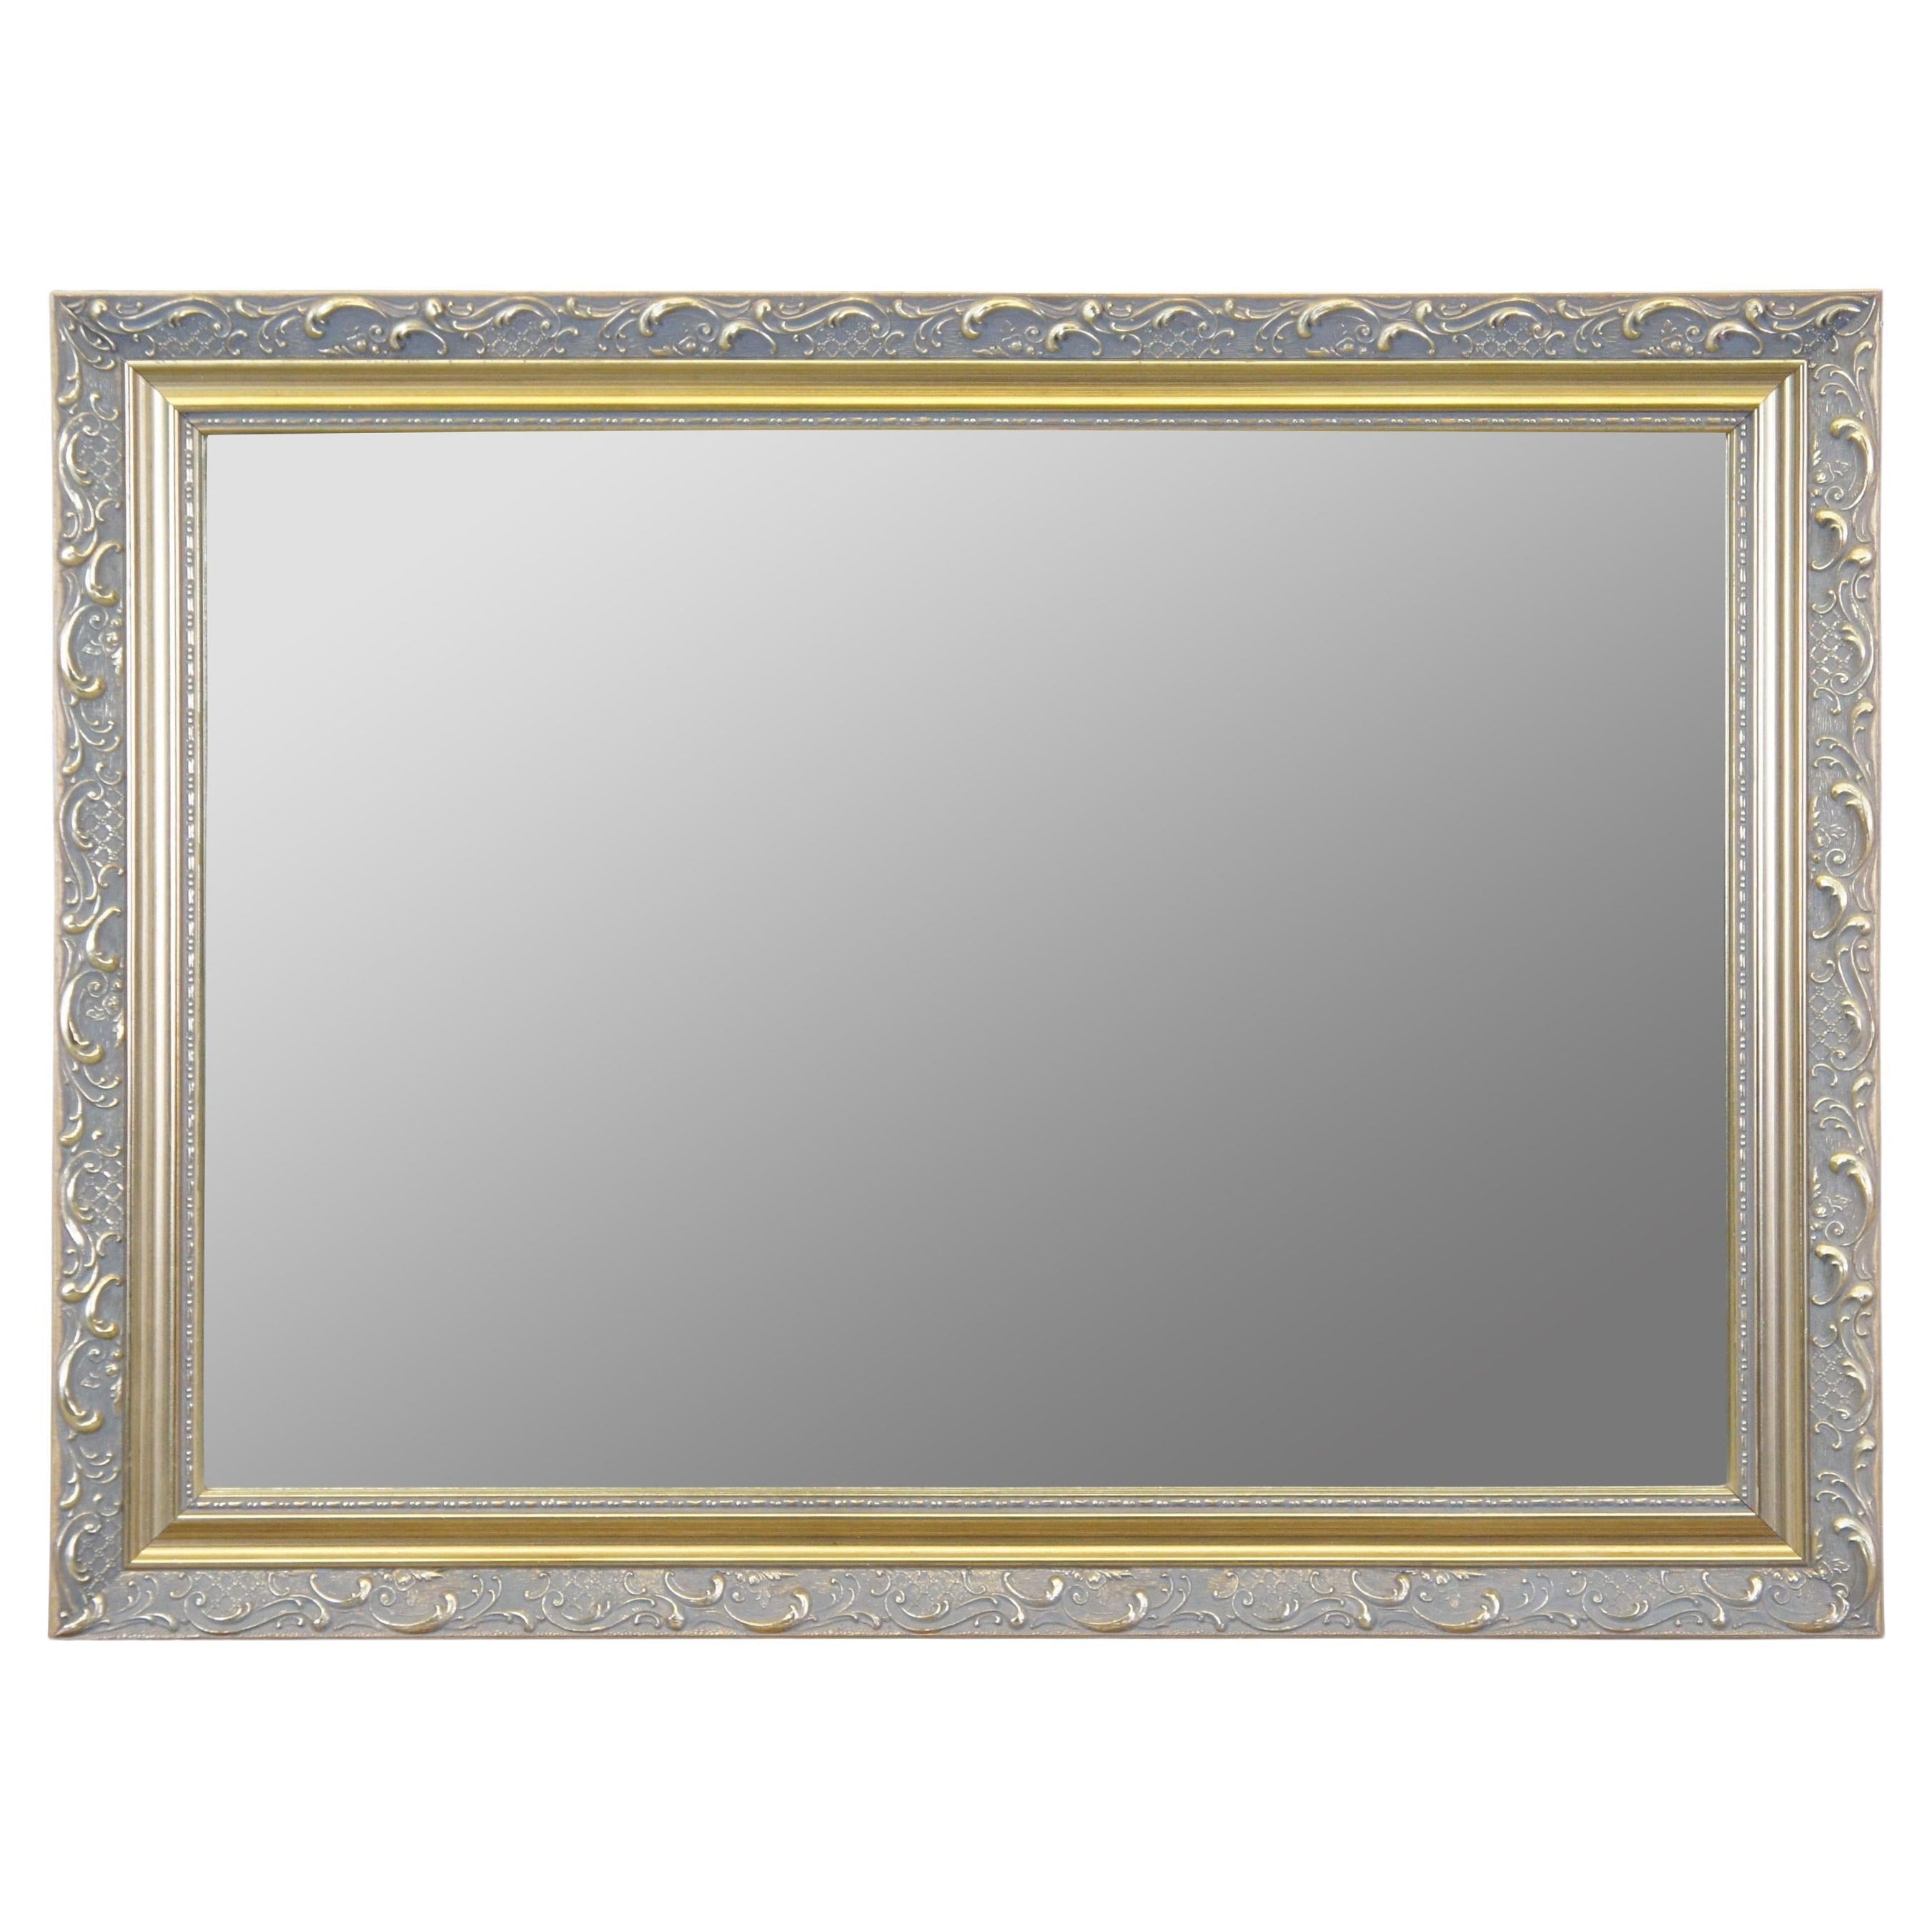 Carolina Mirror Company Rectangular Gold over Mantel Wall Mirror Beveled Glass For Sale